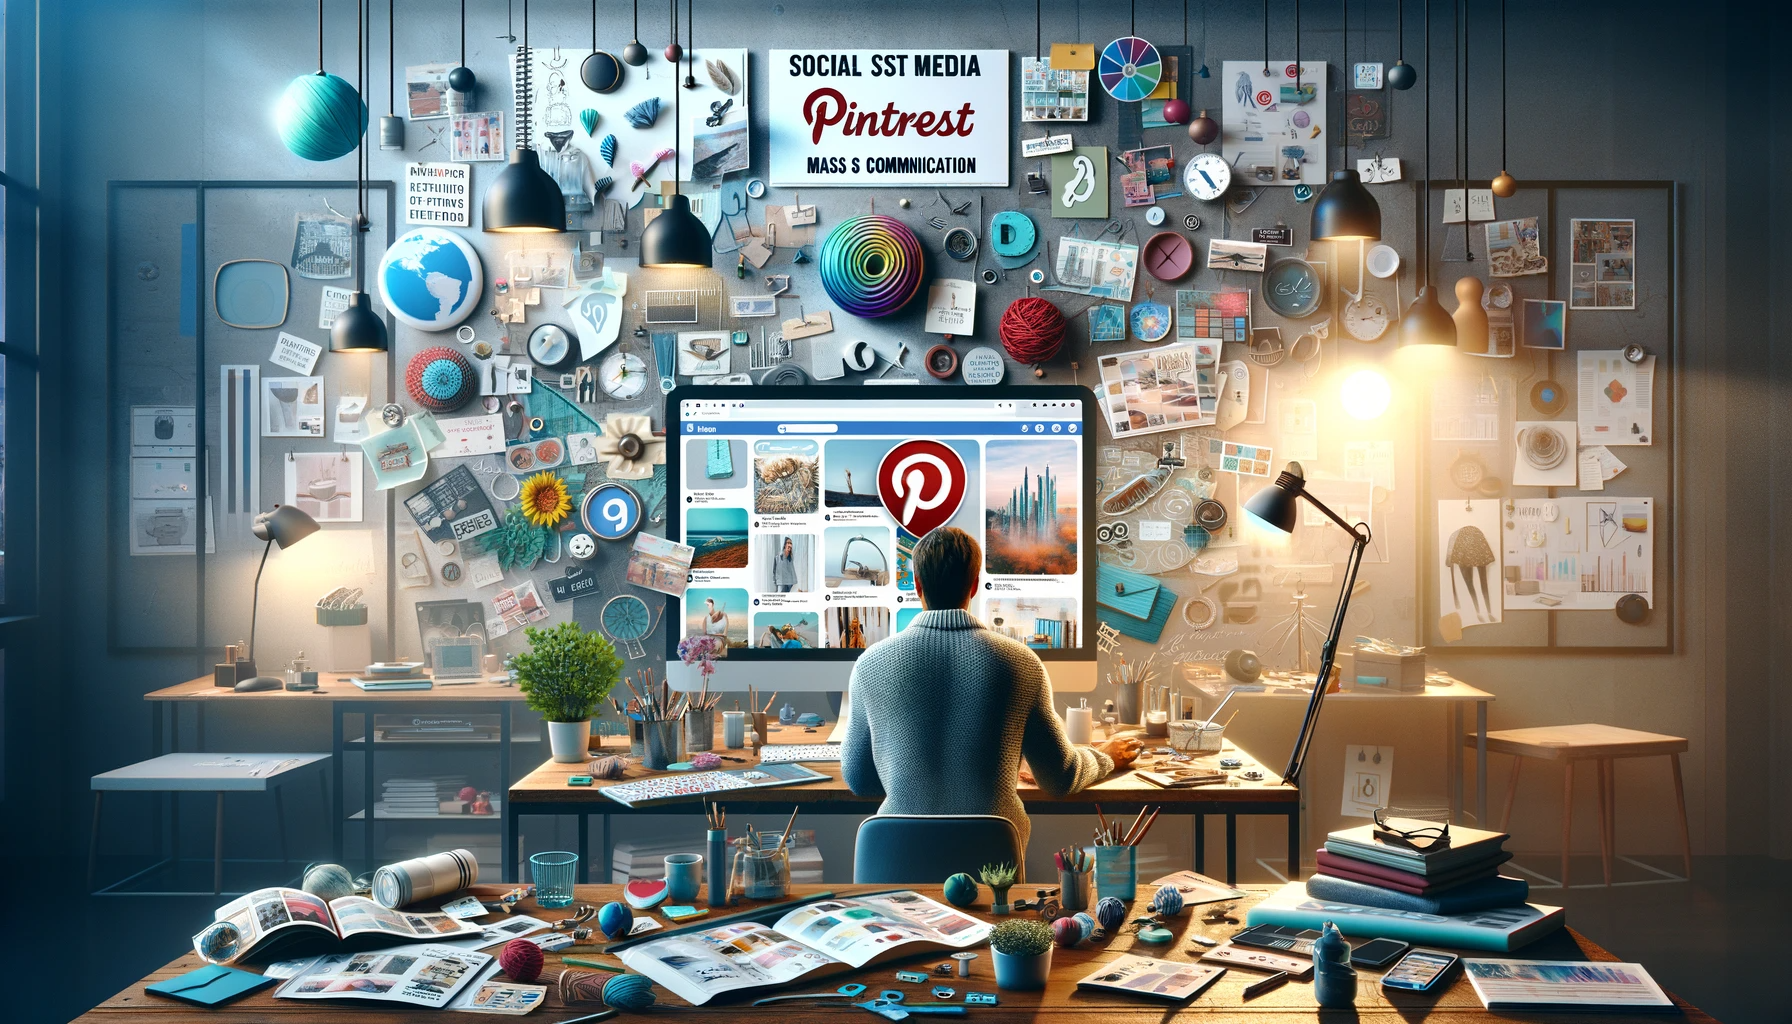 Social Media Mass Communication for Pinterest for Product Catalogs